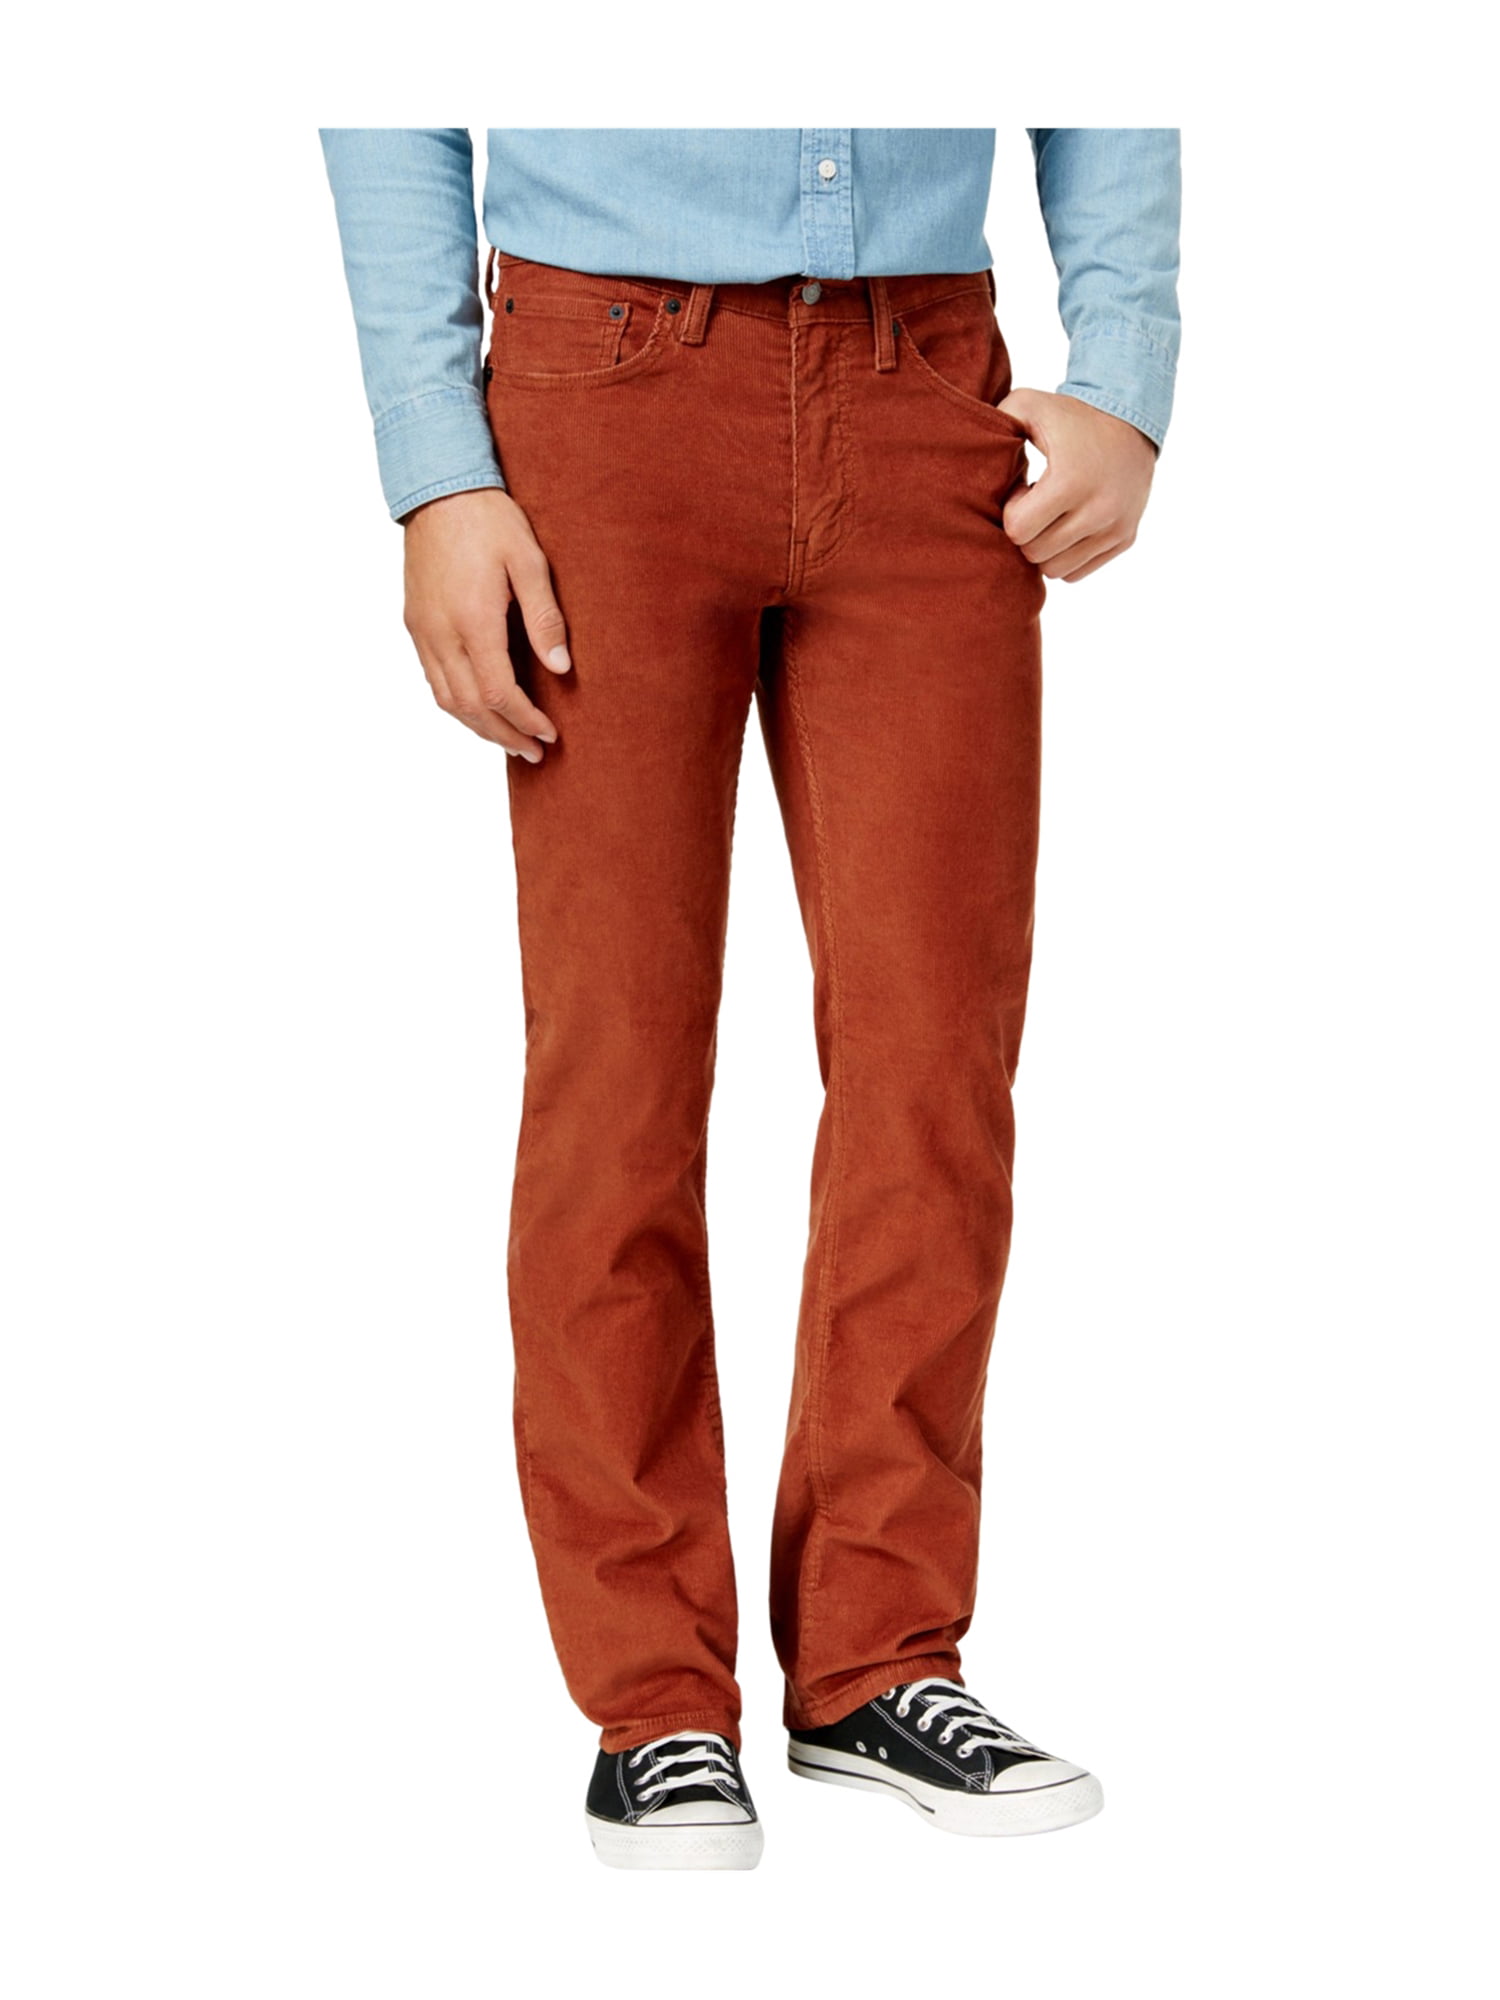 Levi's Mens Bedford Casual Corduroy Pants richbrown 34x30 | Walmart Canada